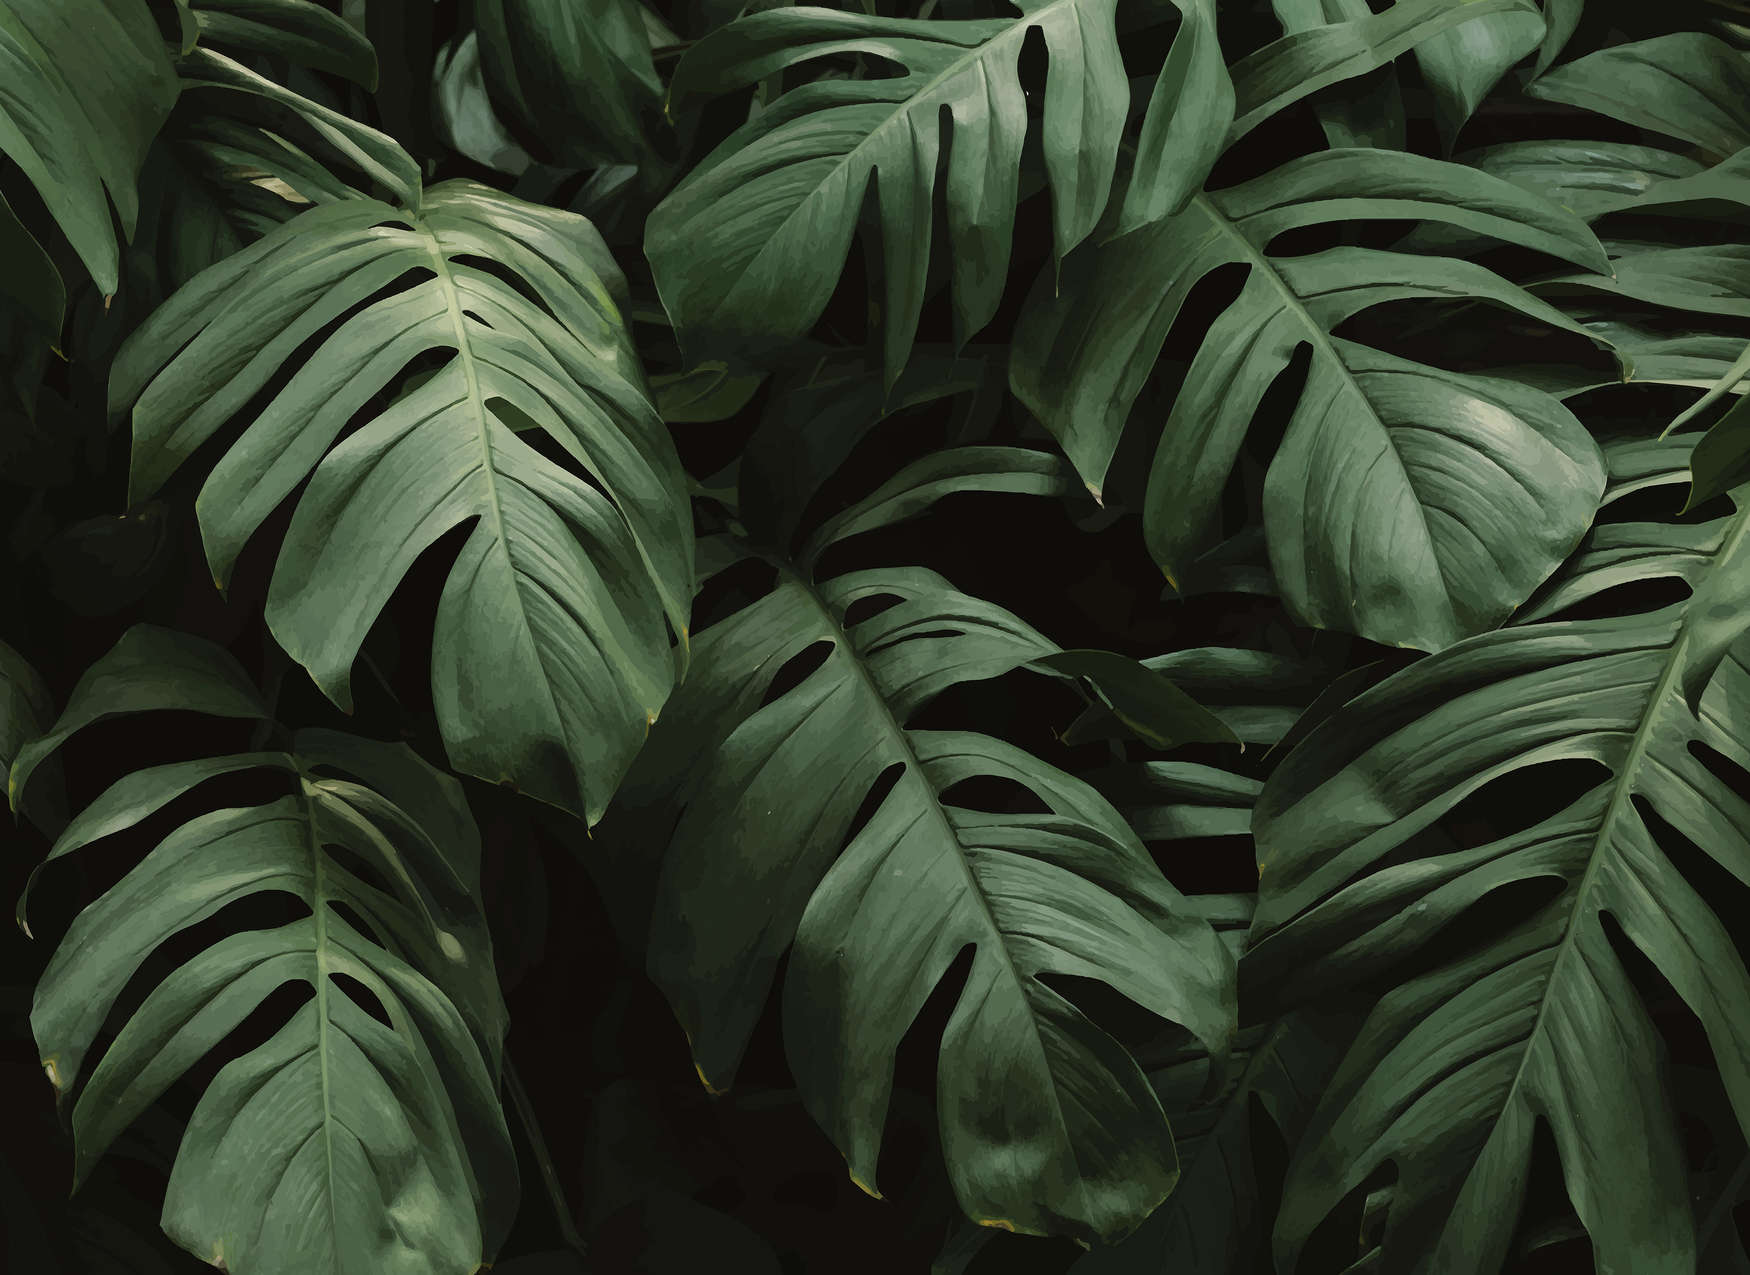             Tropical Jungle Leaves Close-Up Wallpaper - Green
        